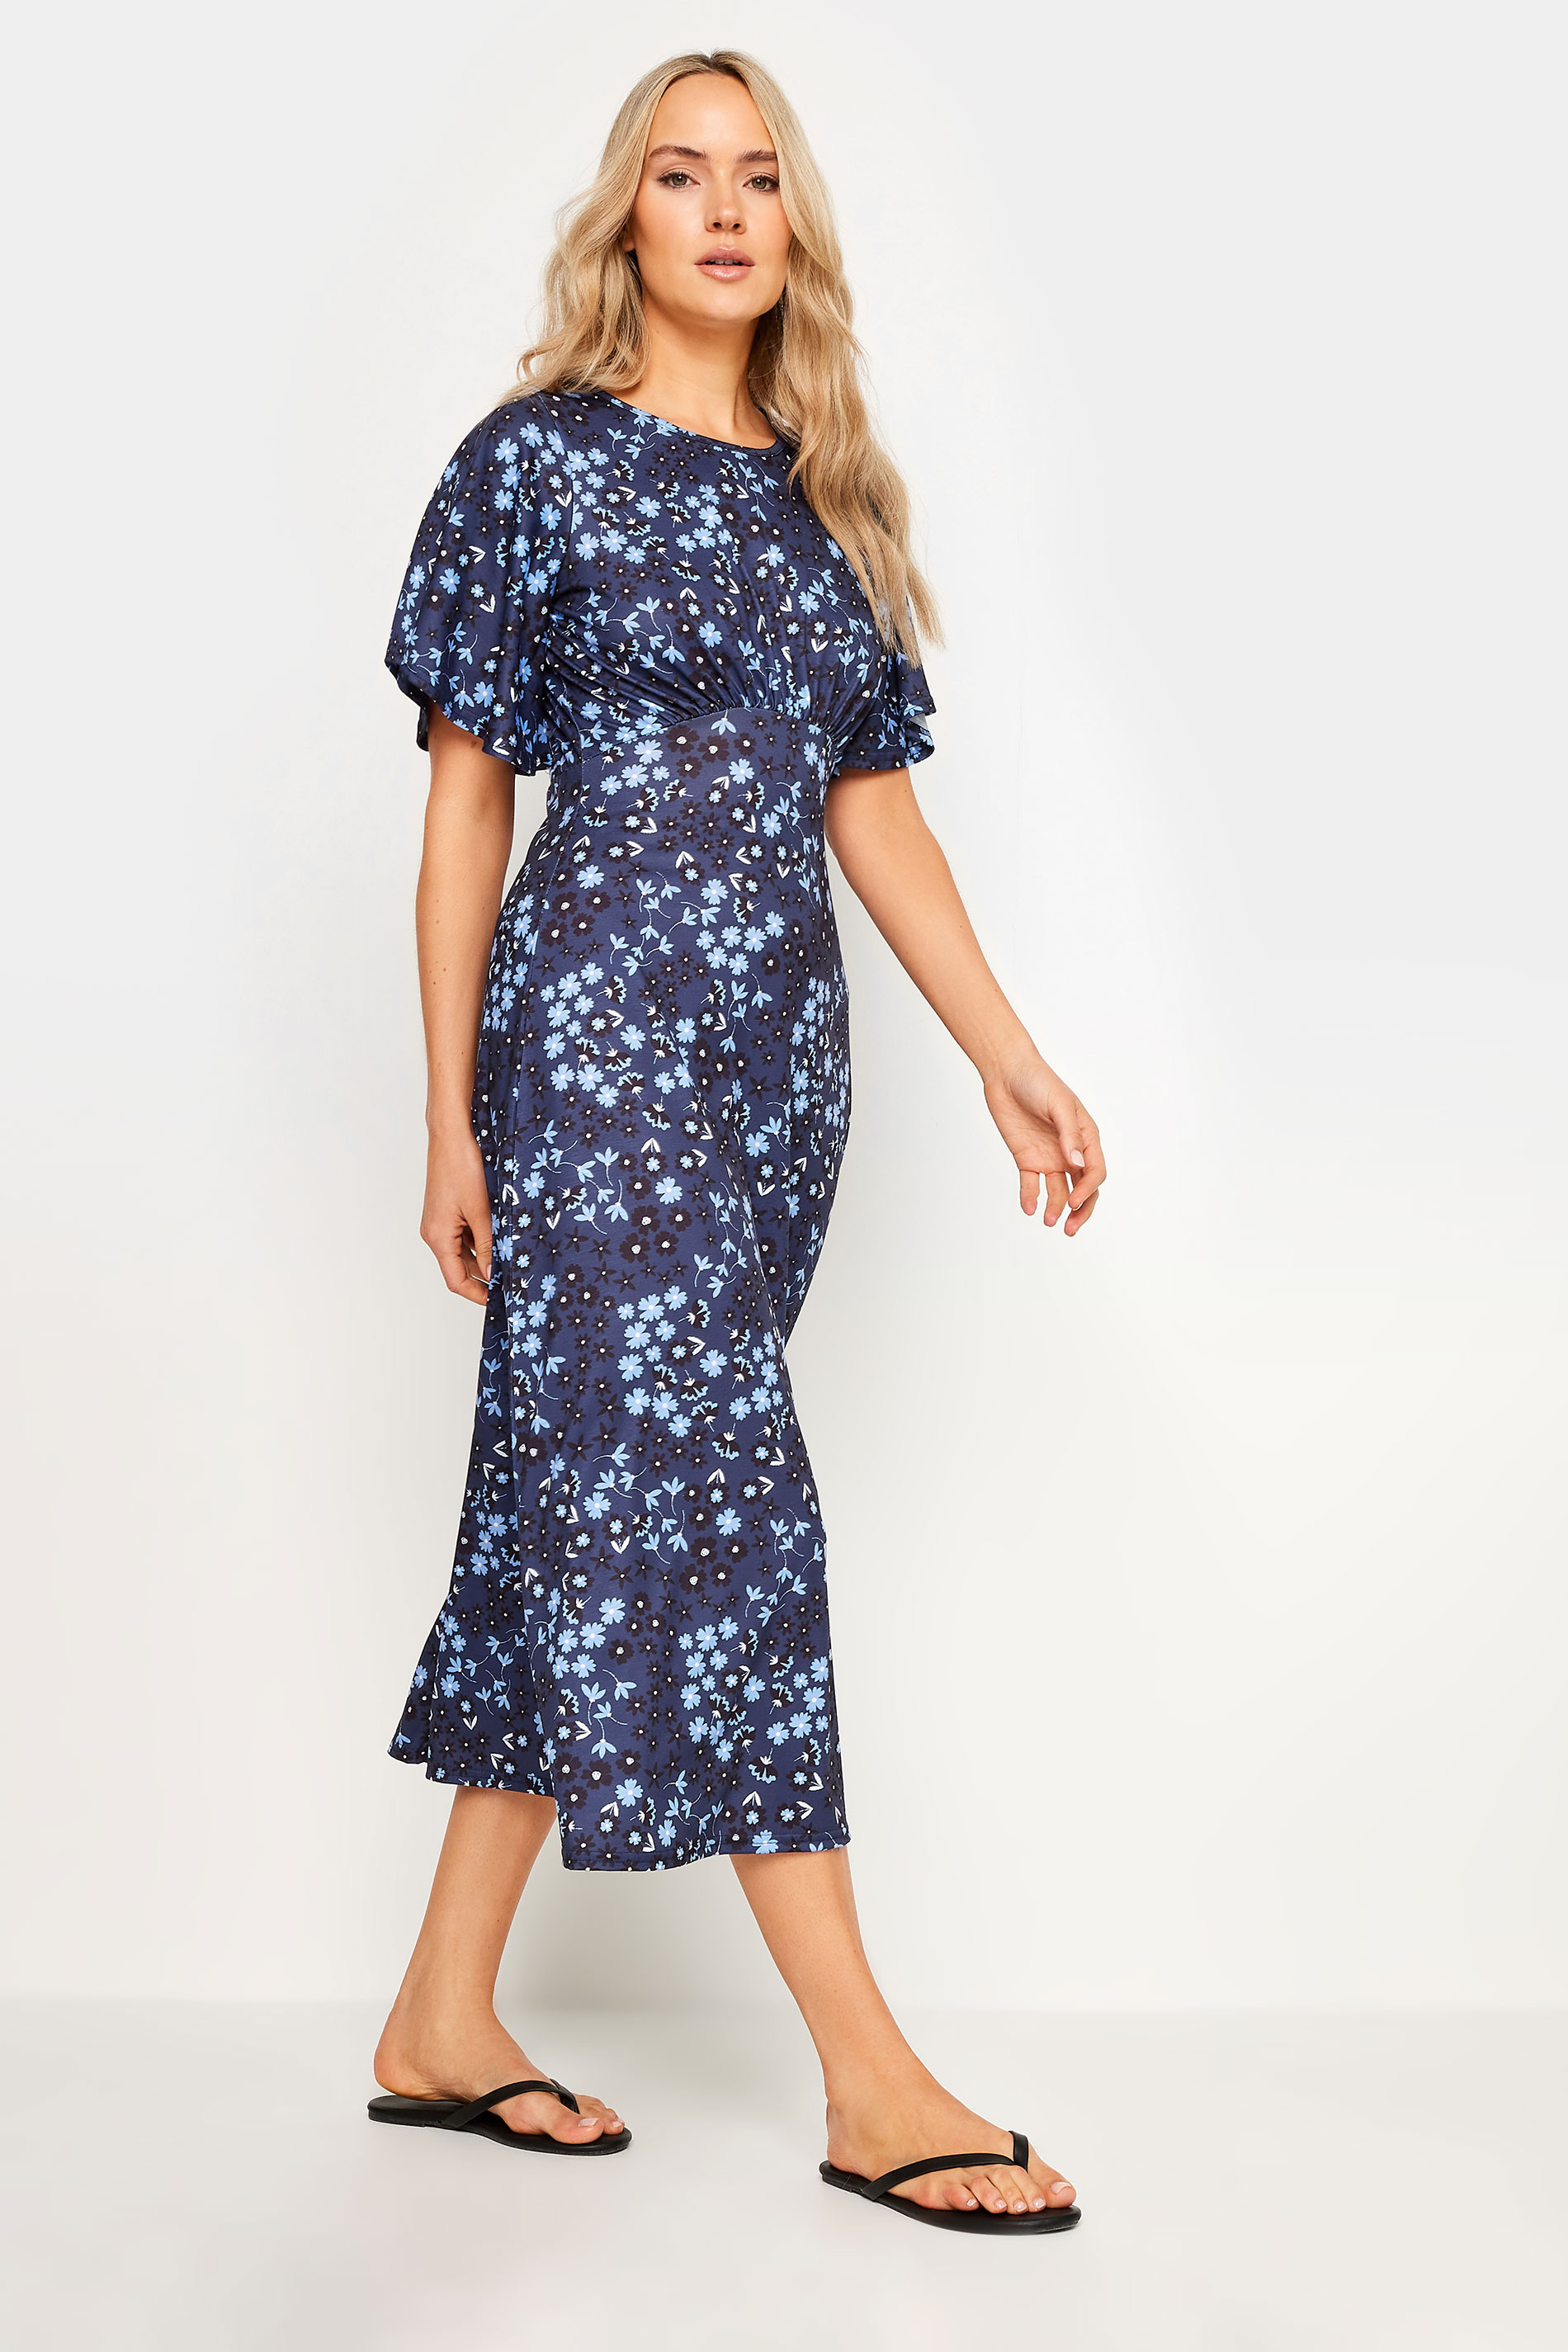 LTS Tall Women's Navy Blue Floral Midi Dress | Long Tall Sally 2